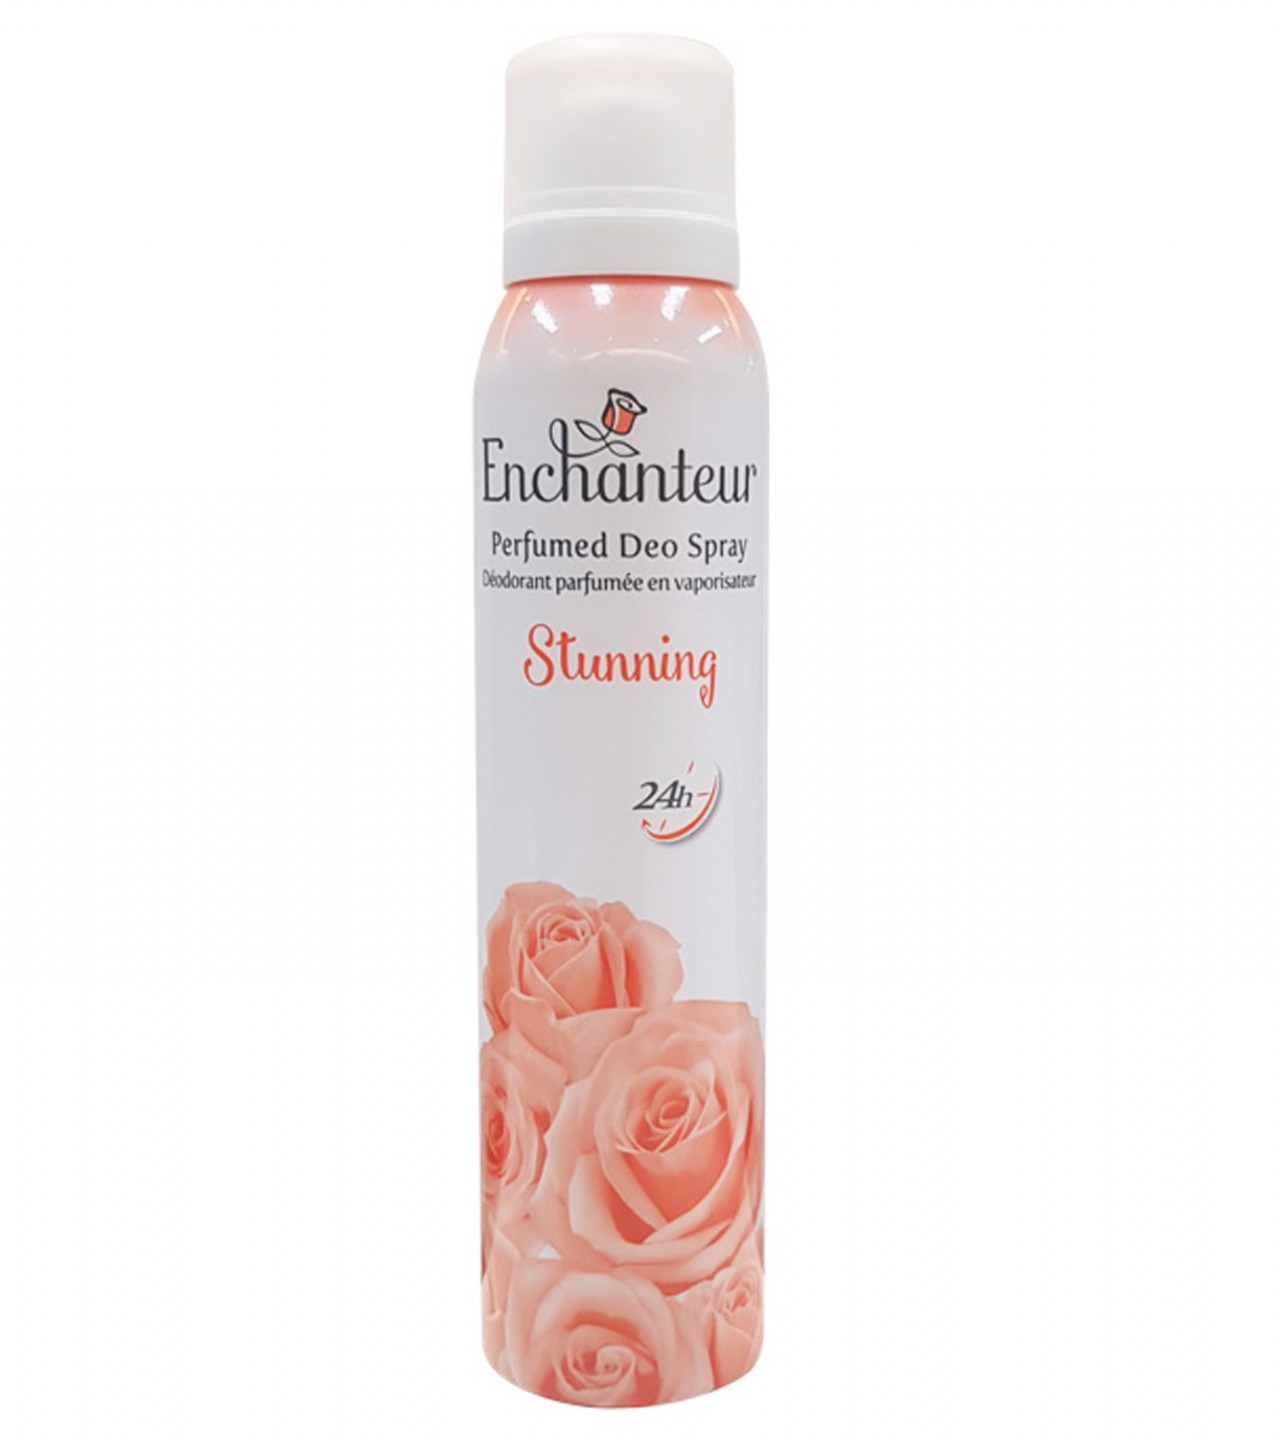 Enchanteur Stunning Body Spray Deodorant For Women – 150 ml